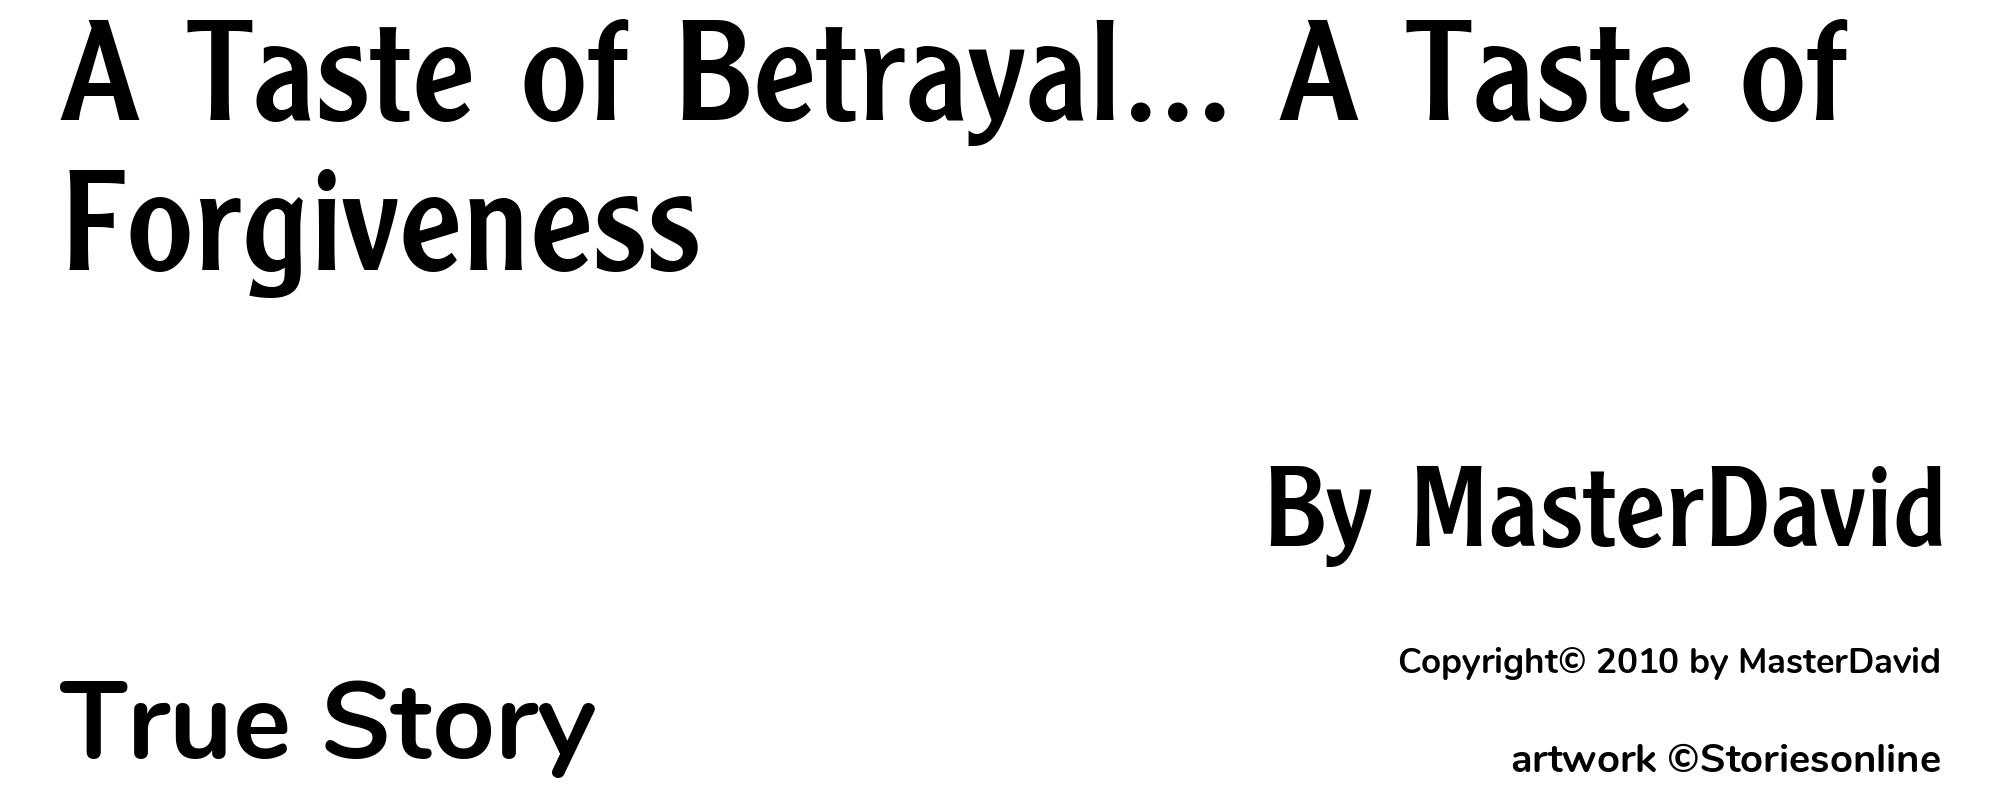 A Taste of Betrayal... A Taste of Forgiveness - Cover